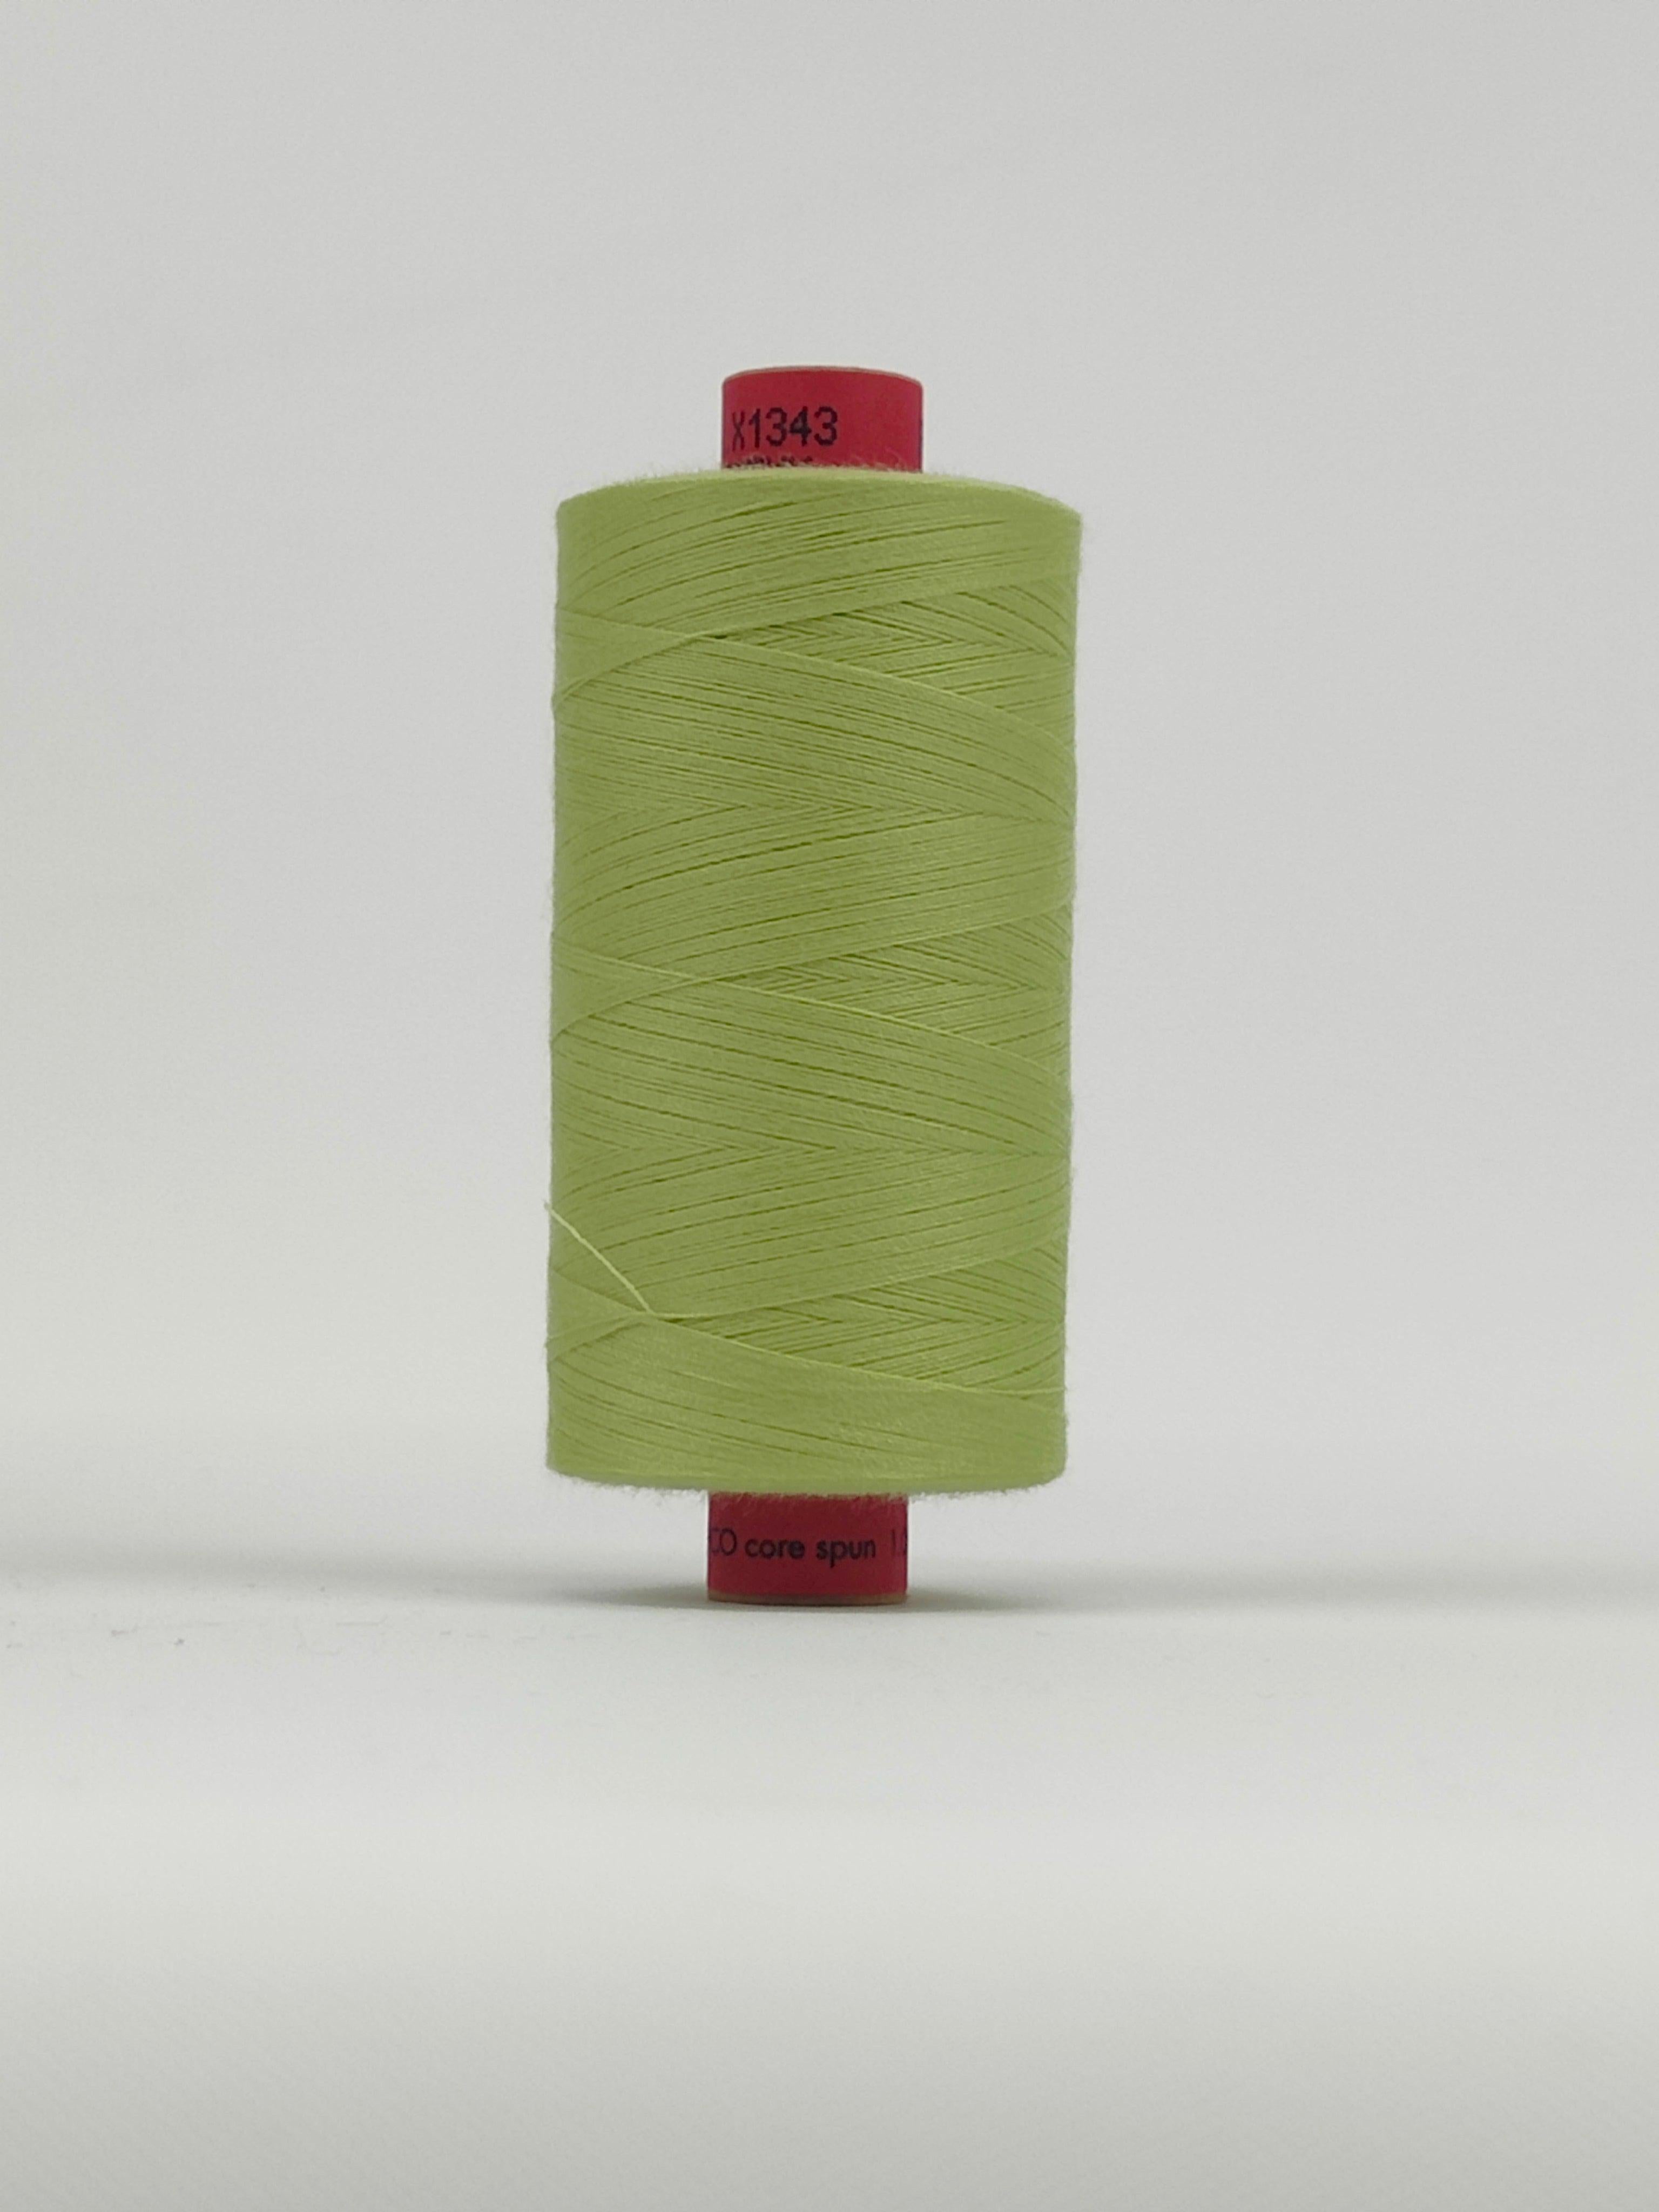 Rasant Thread Splice #x1343 (1000 metres) - Melco Fabrics